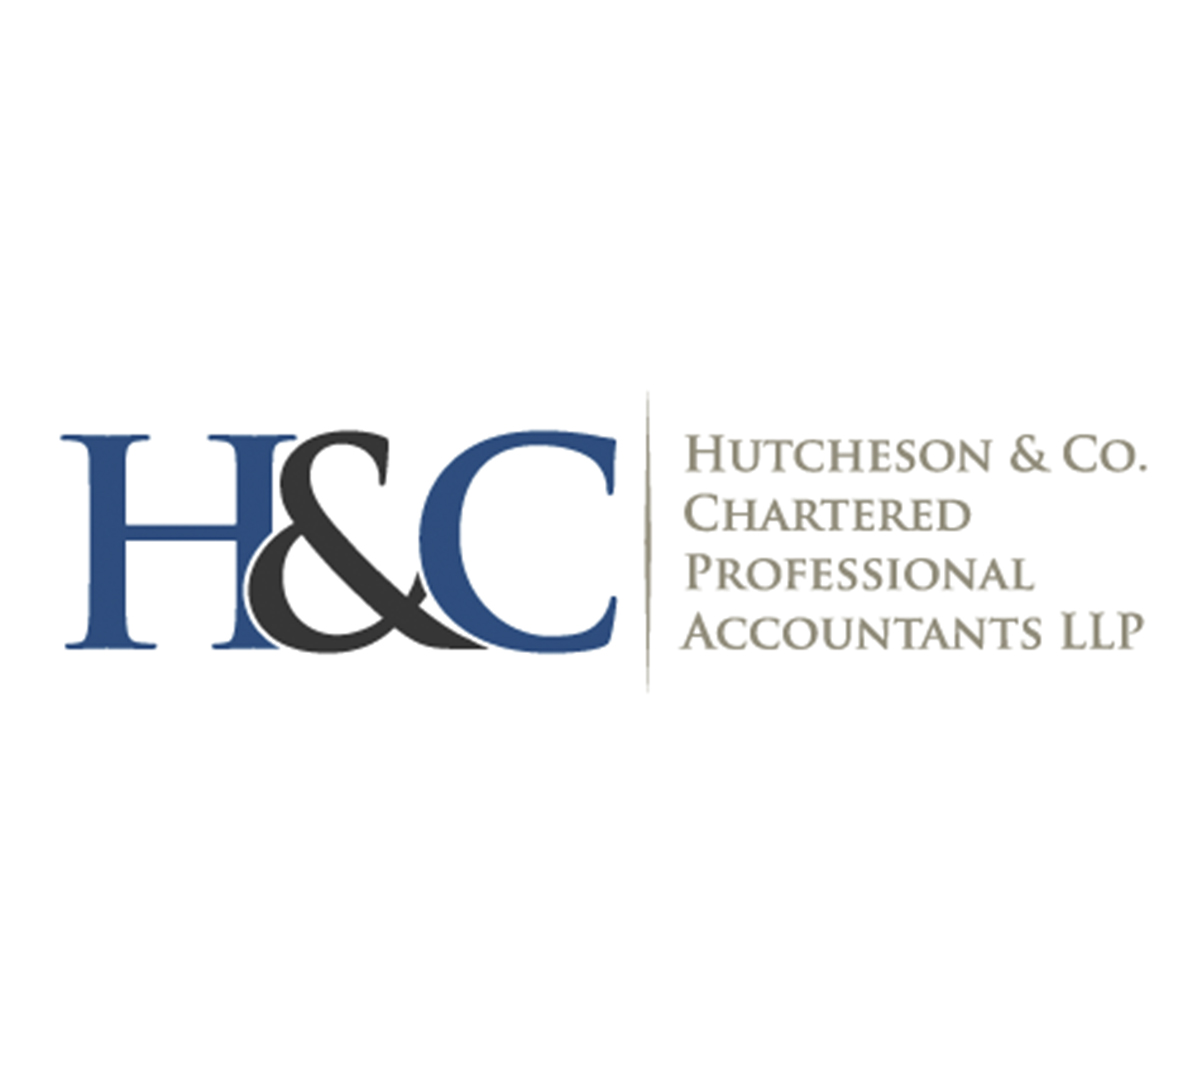 Hutcheson & Co. Chartered Professional Accountants